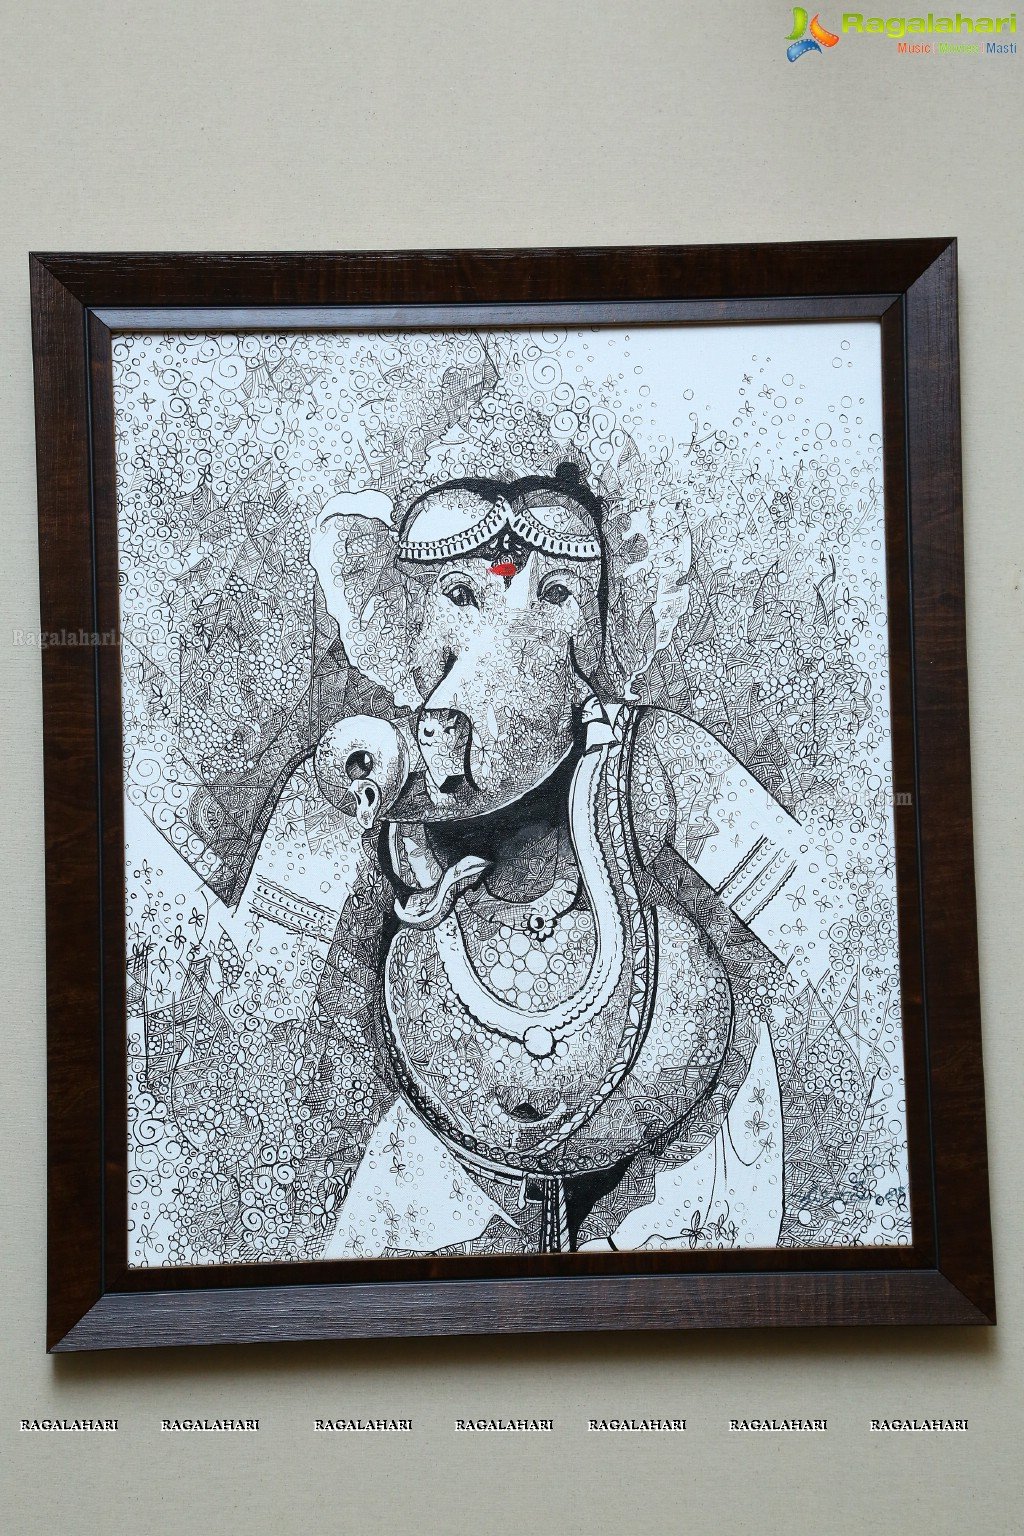 Avighna - An Exhibition of Painting by Srinivas Mancha